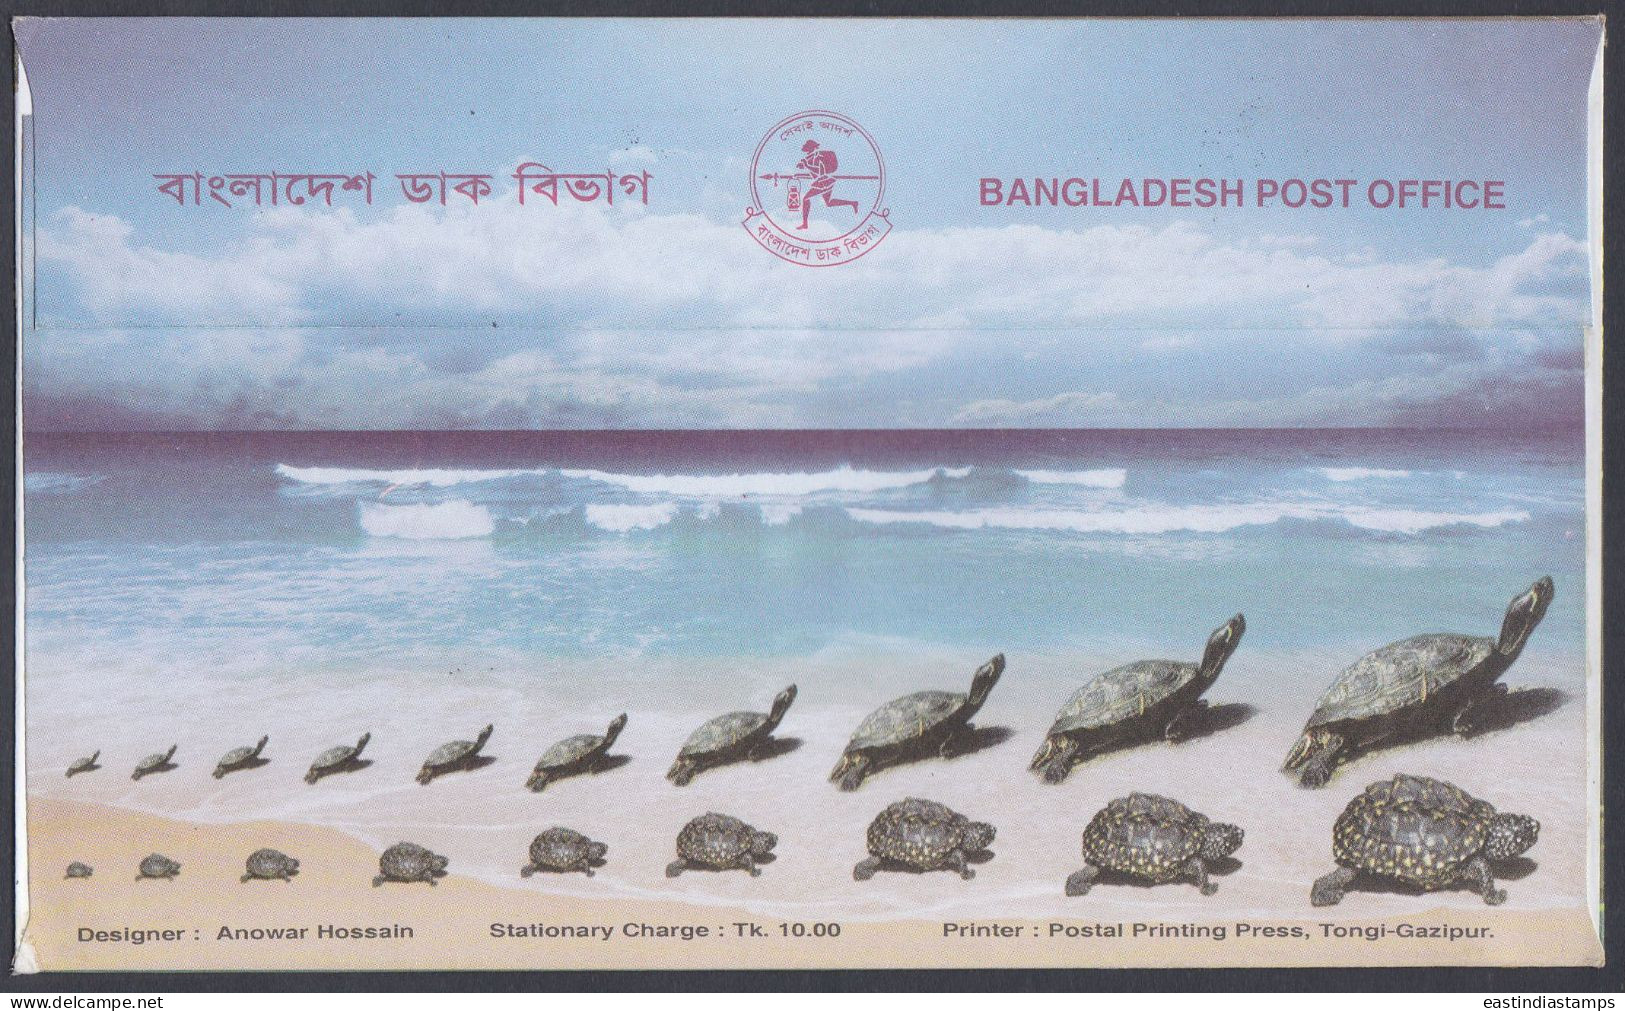 Bangladesh 2011 FDC Turtles, Turtle, Wildlife, Wild Life, Marine Life, First Day Cover - Bangladesh